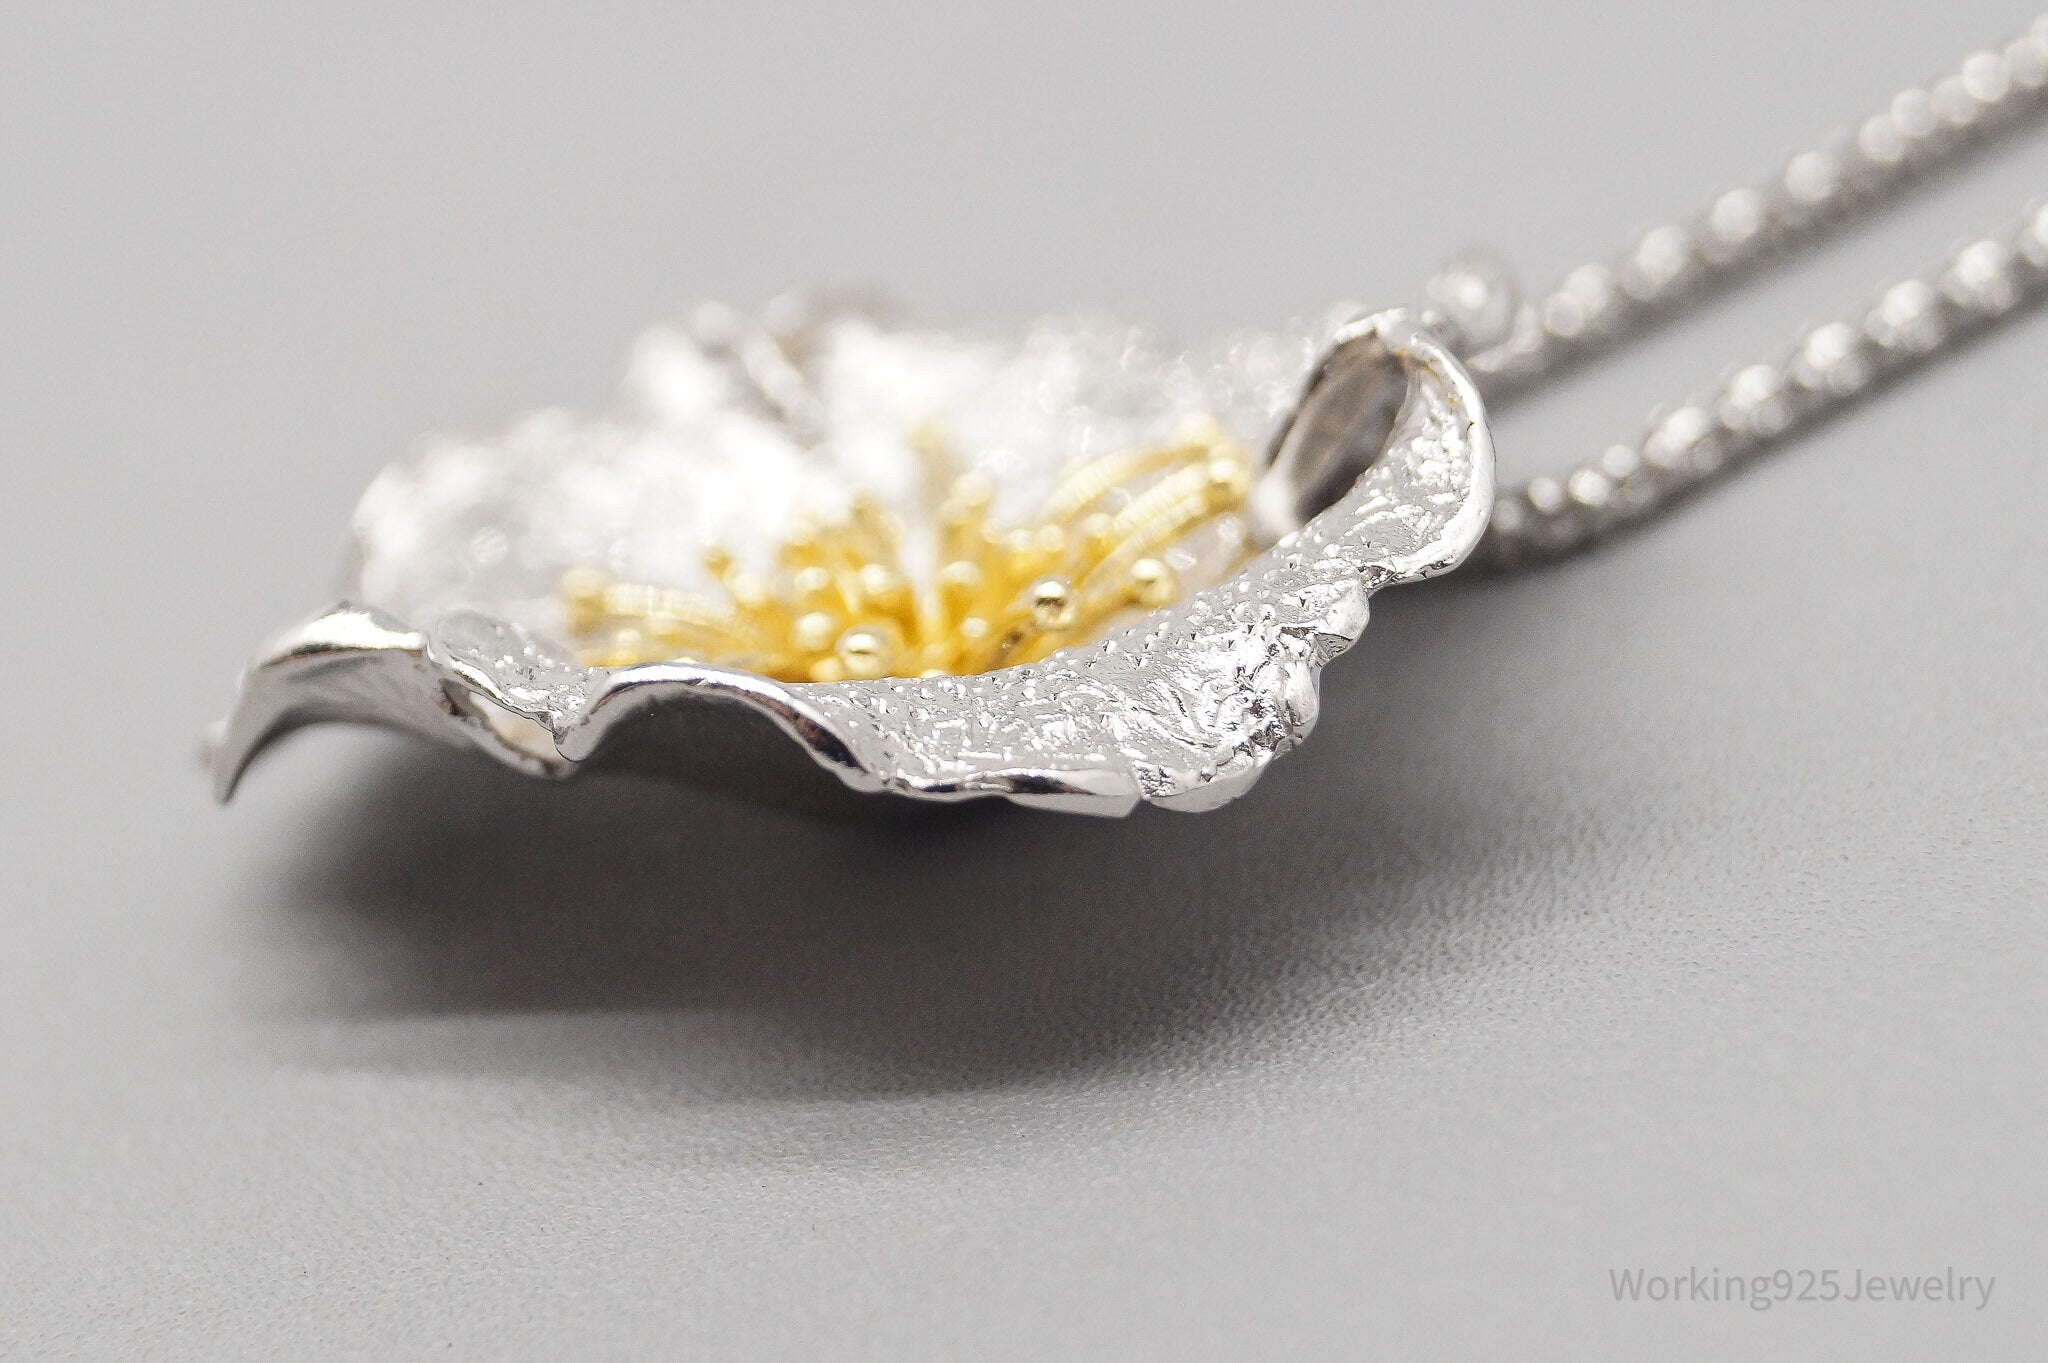 Vintage Italian JCM Gold Vermeil Sterling Silver Flower Necklace 18"